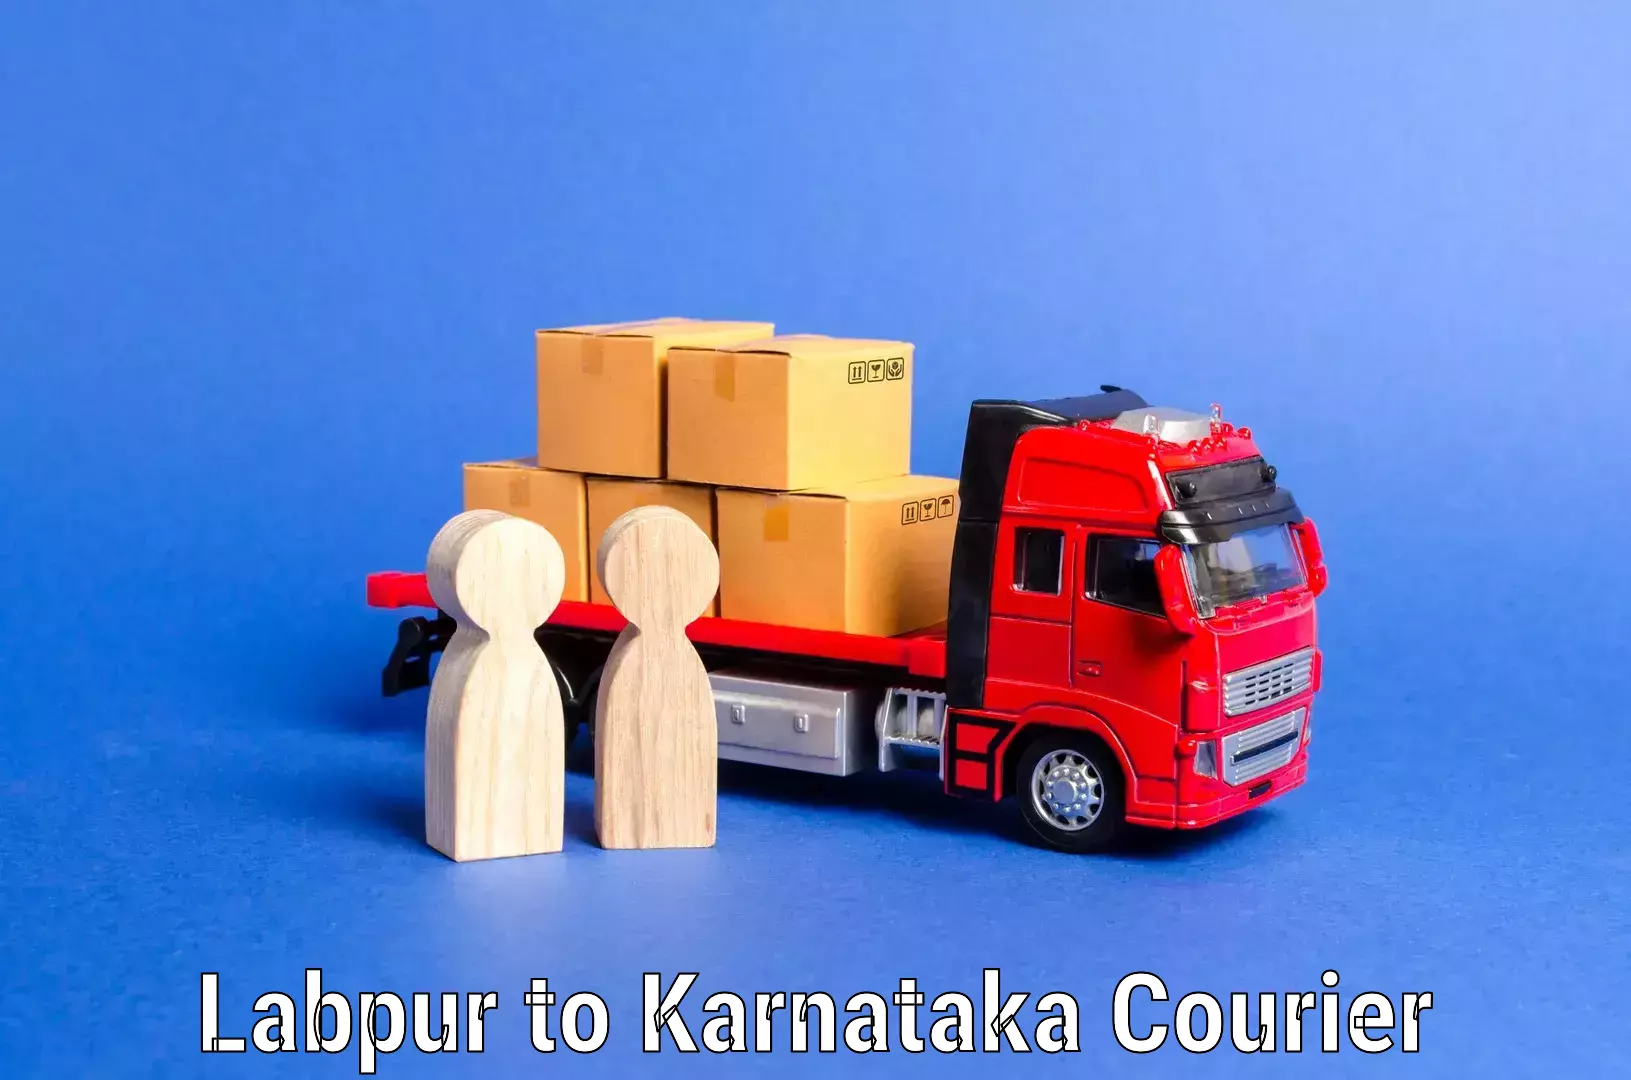 Furniture transport service Labpur to Karnataka